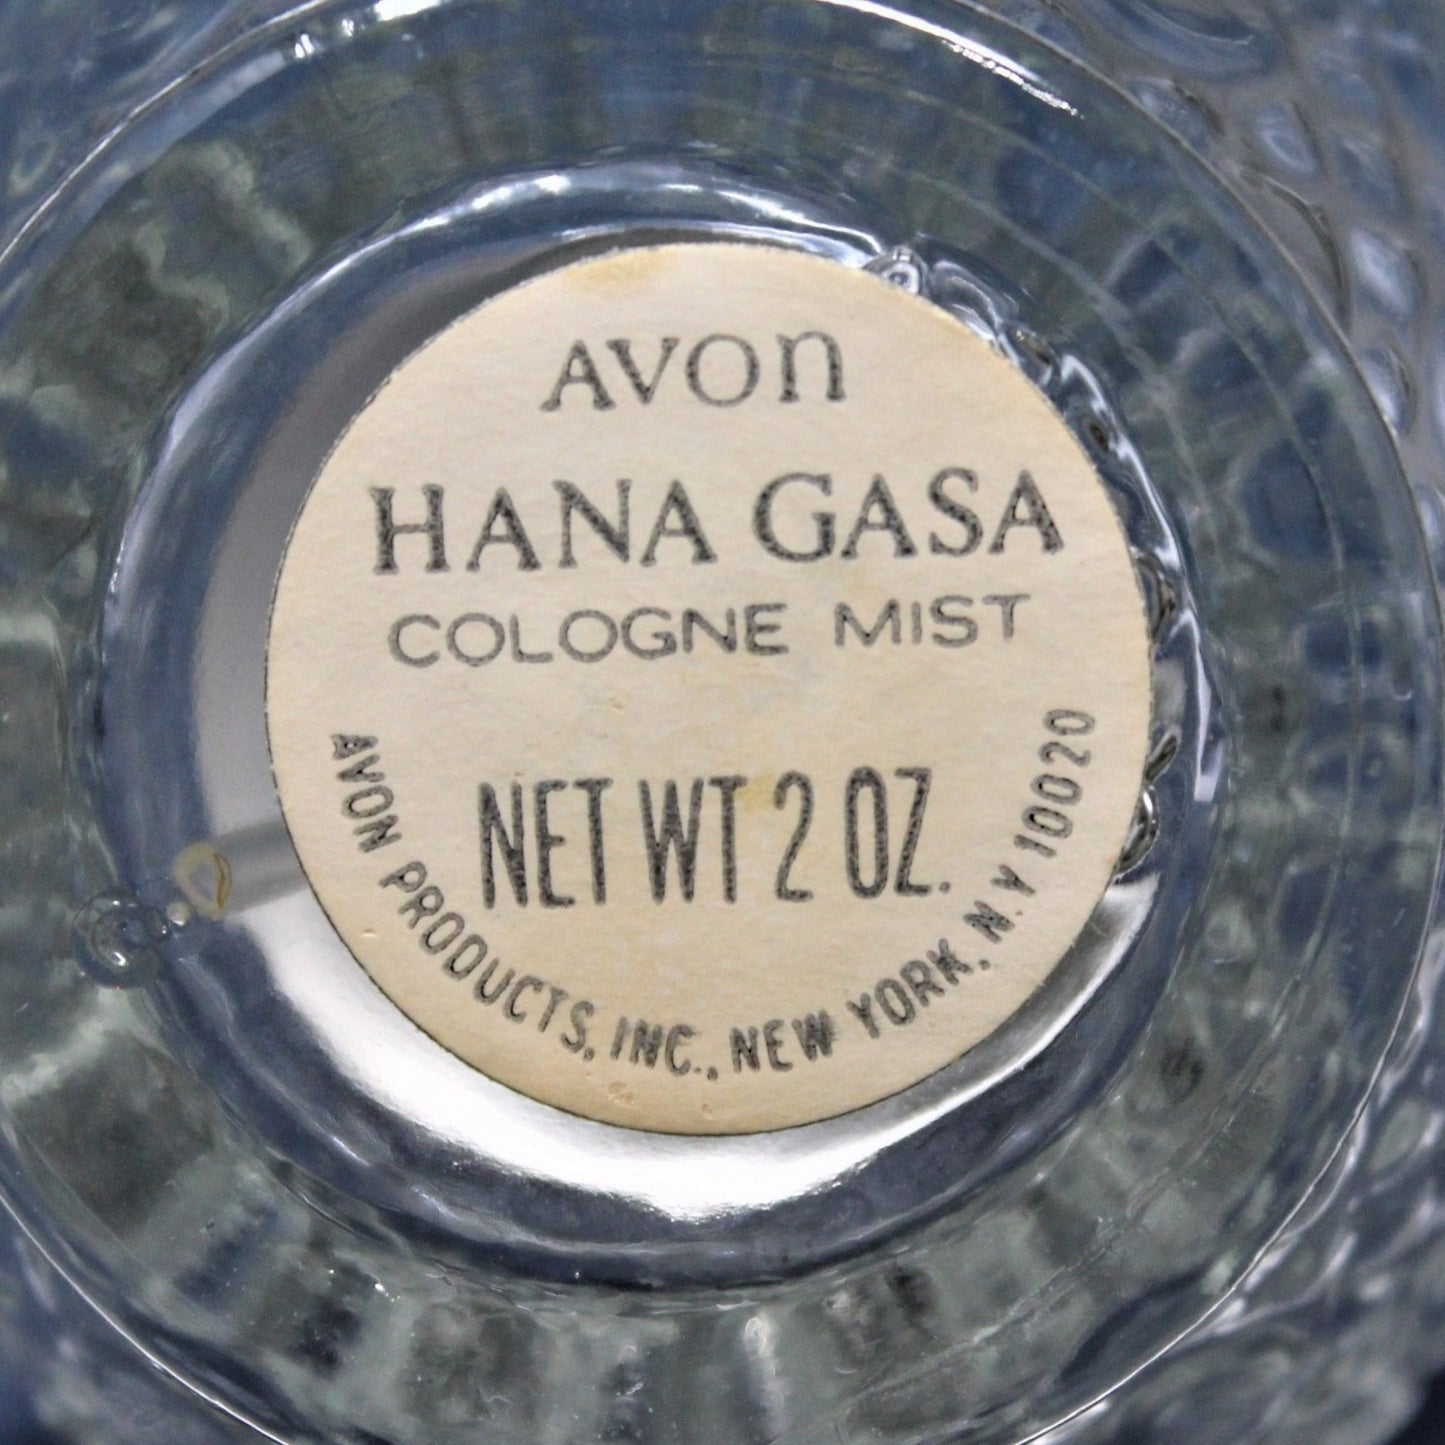 Perfume Bottle, Avon, Hana Gasa Spray Glass & Metal Top, Vintage